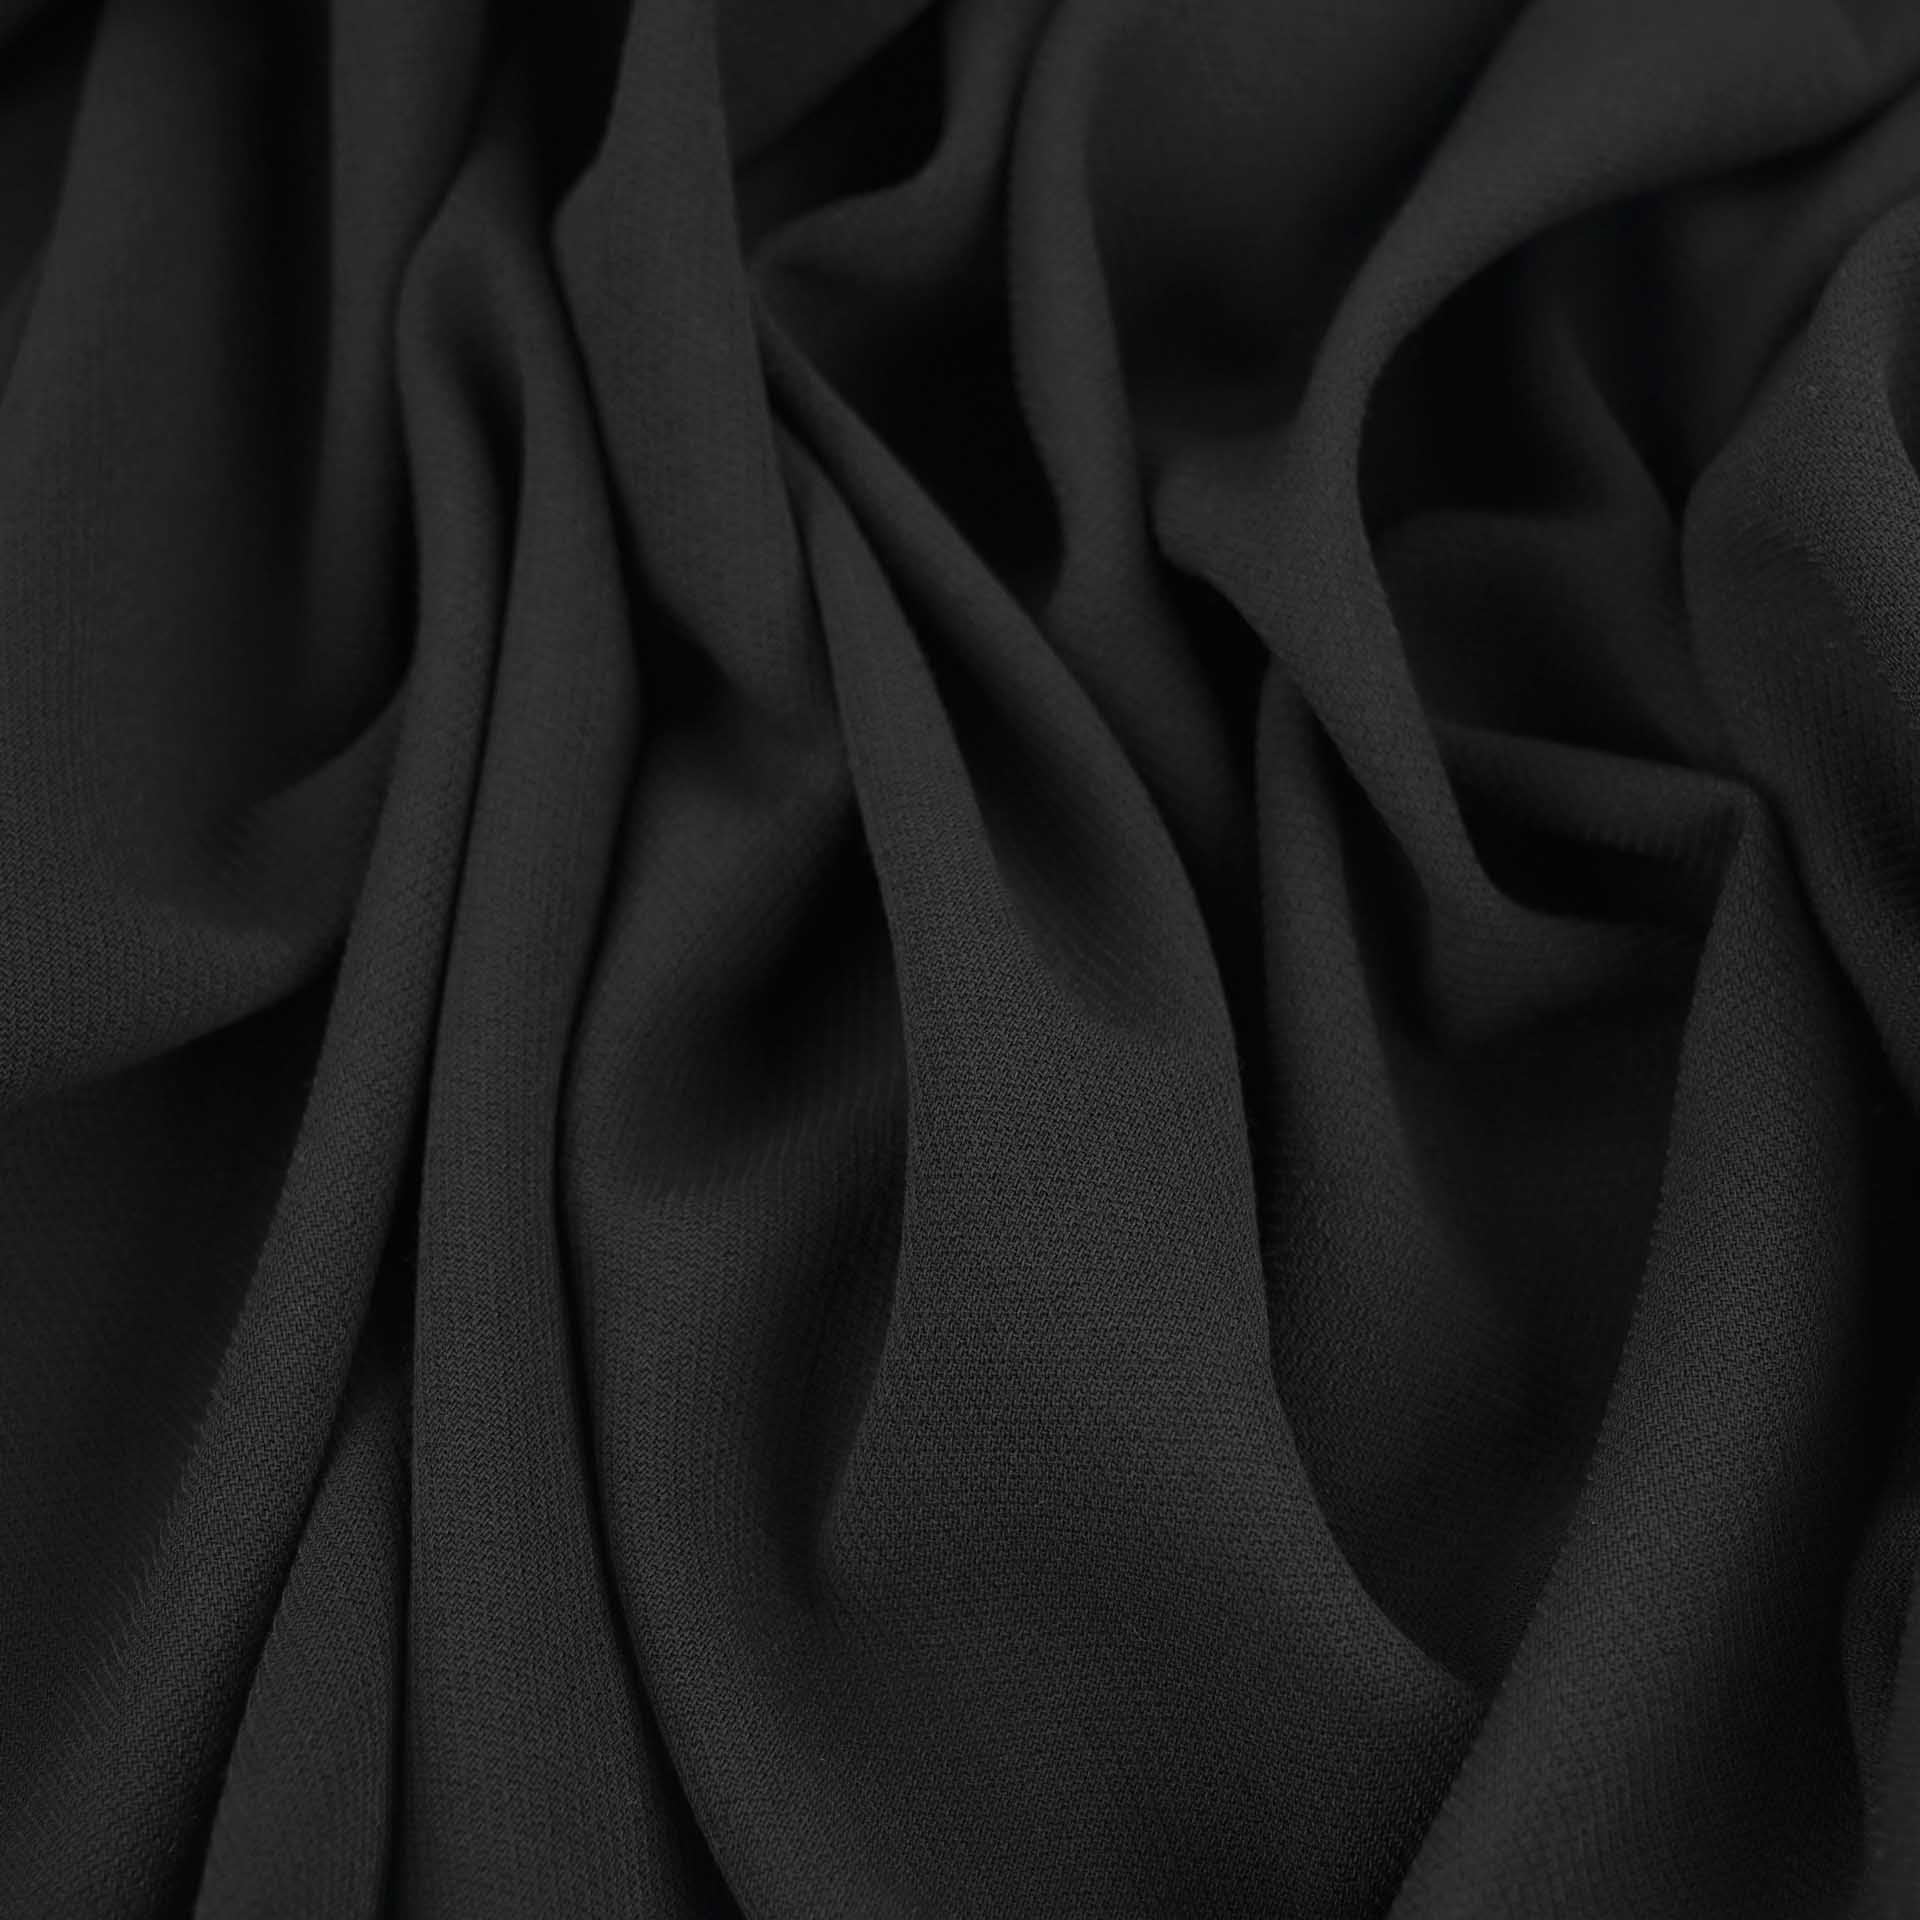 Black Wool Crepe Fabric 97423